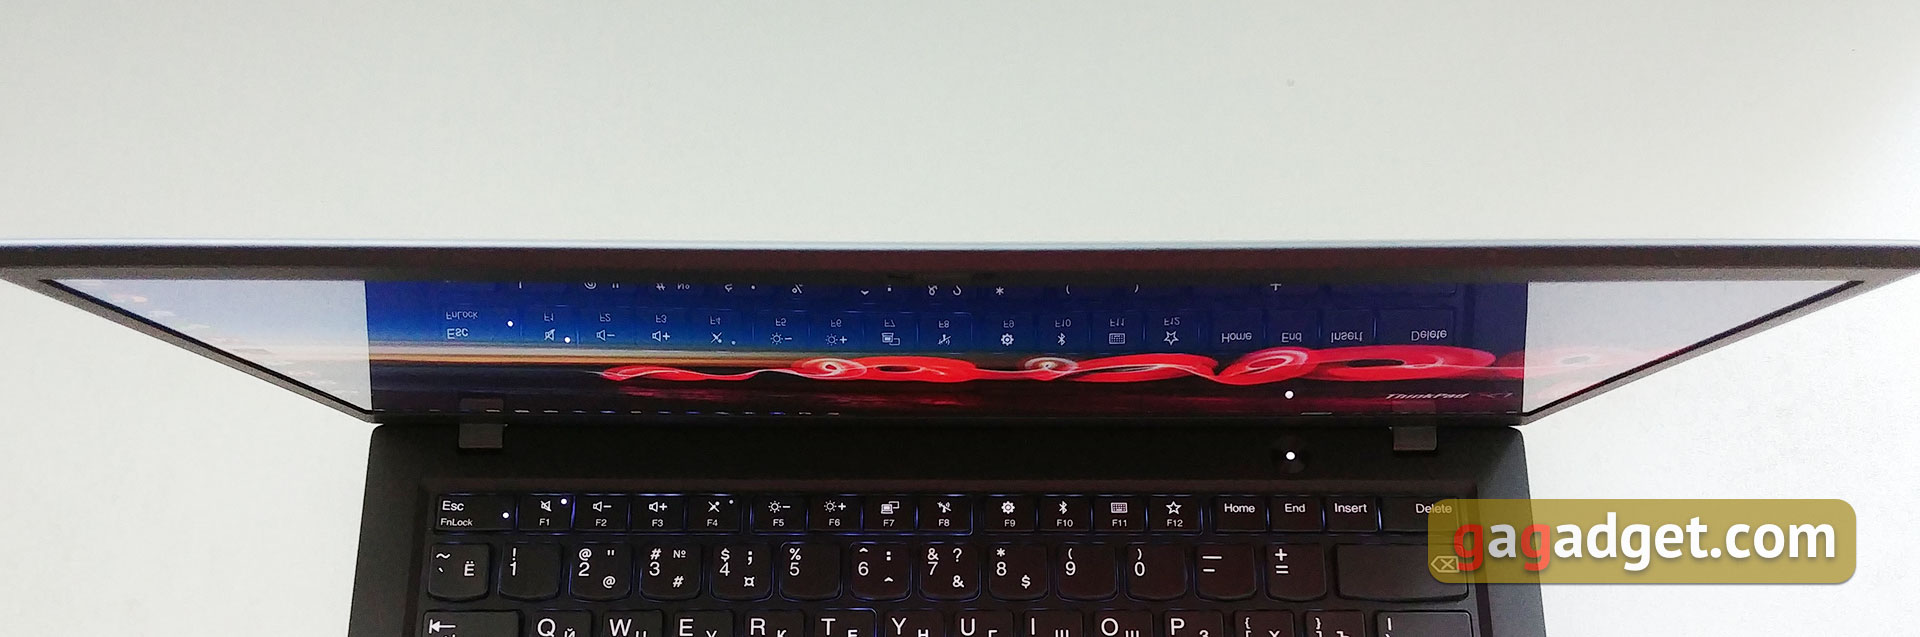 Обзор Lenovo ThinkPad X1 Carbon 6th Gen: топовый бизнес-ультрабук с HDR-экраном-34